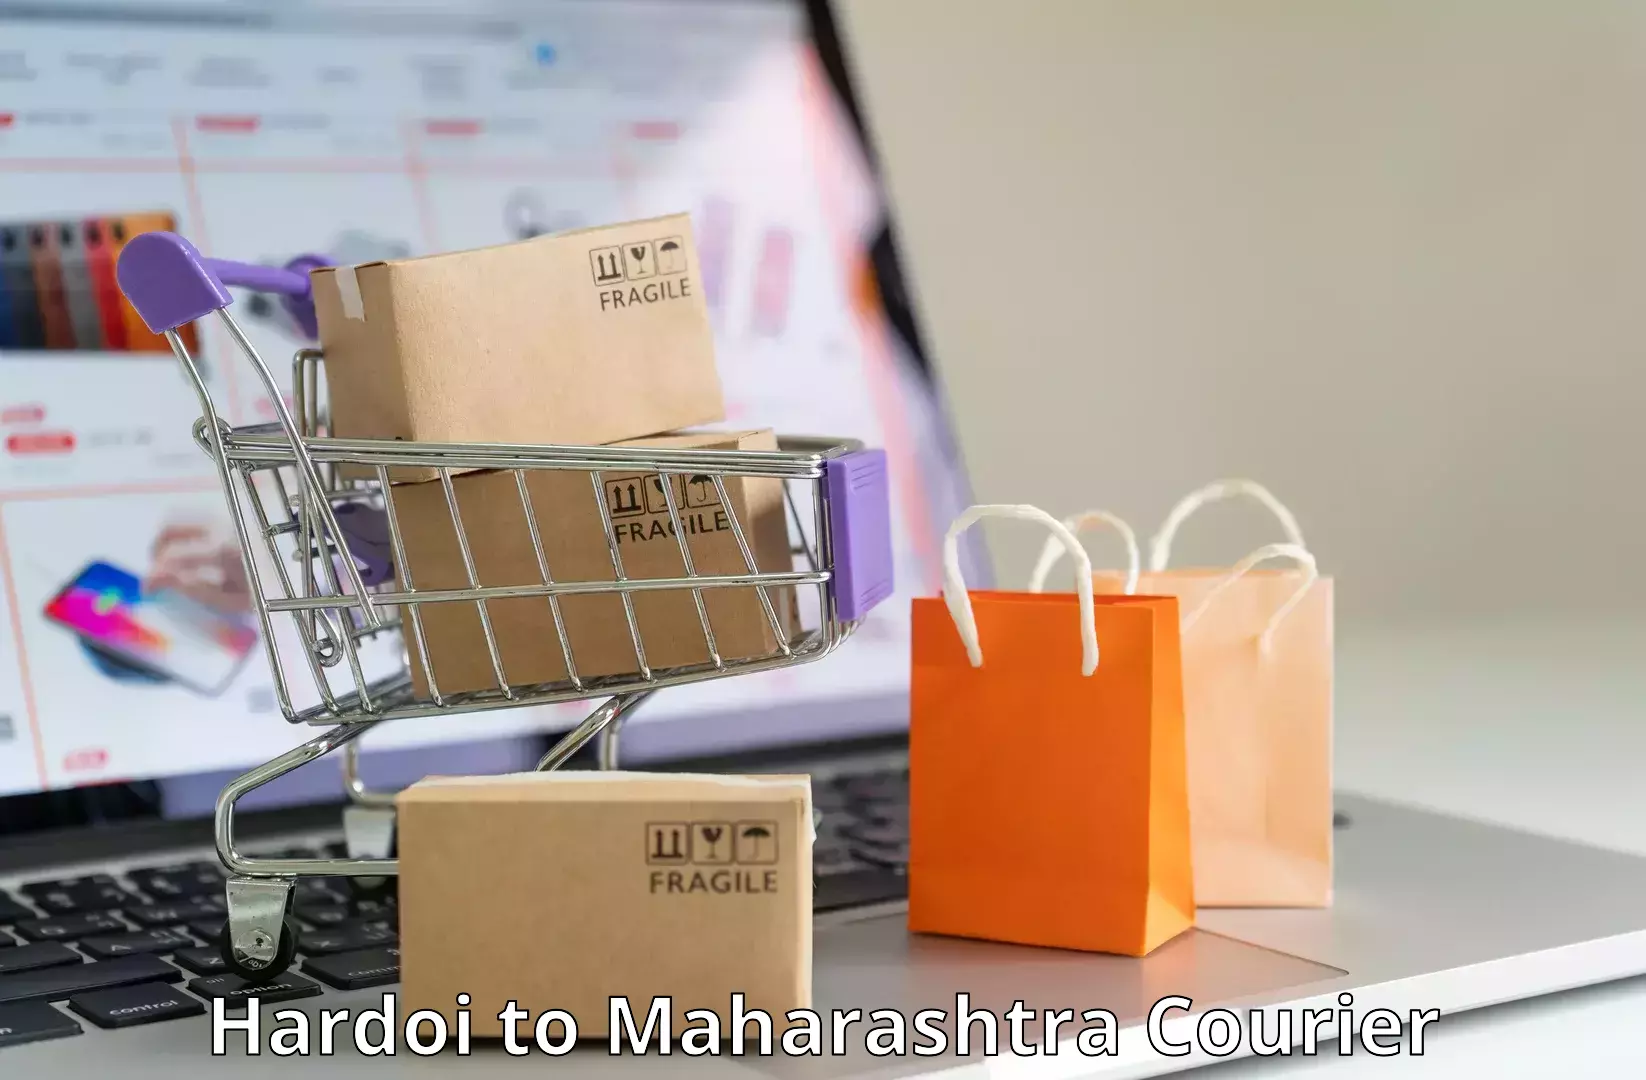 Subscription-based courier Hardoi to Nagpur